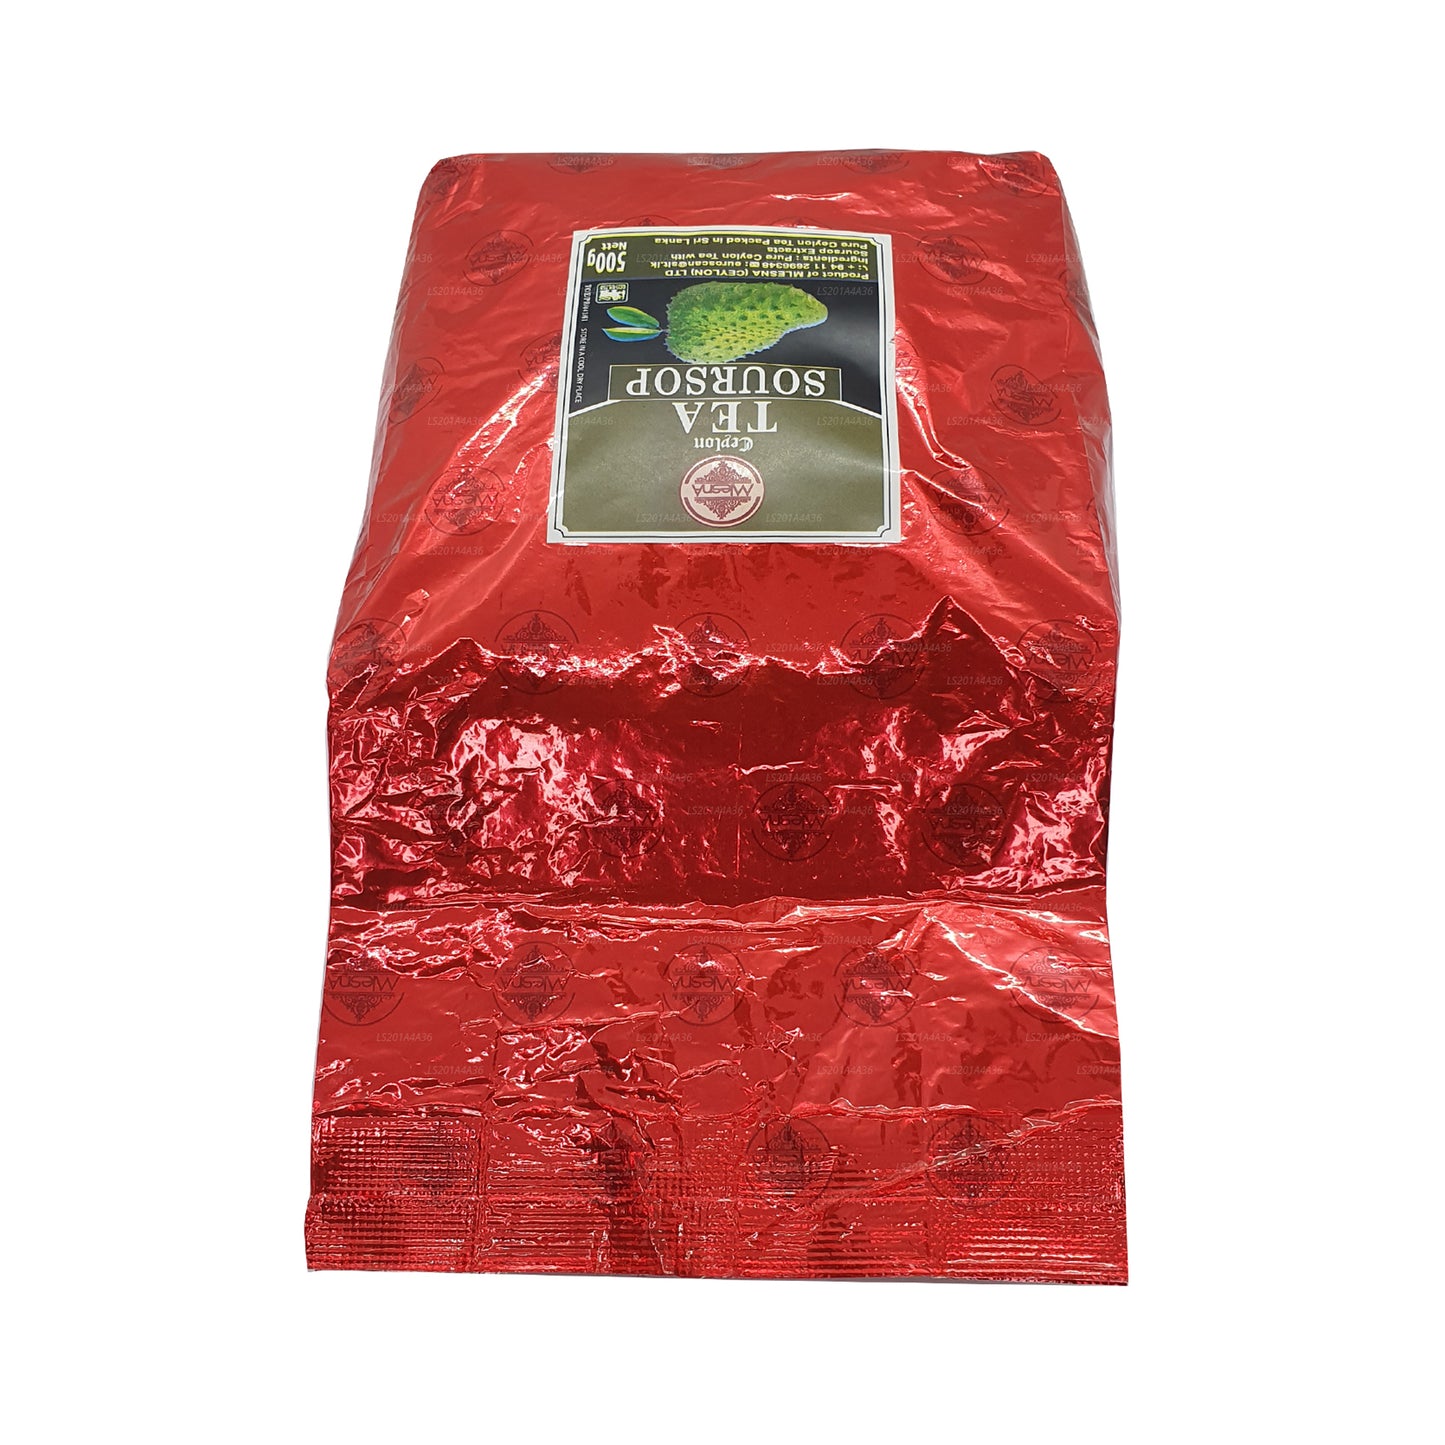 Mlesna Ceylon Tea Soursop Black Tea (500g)